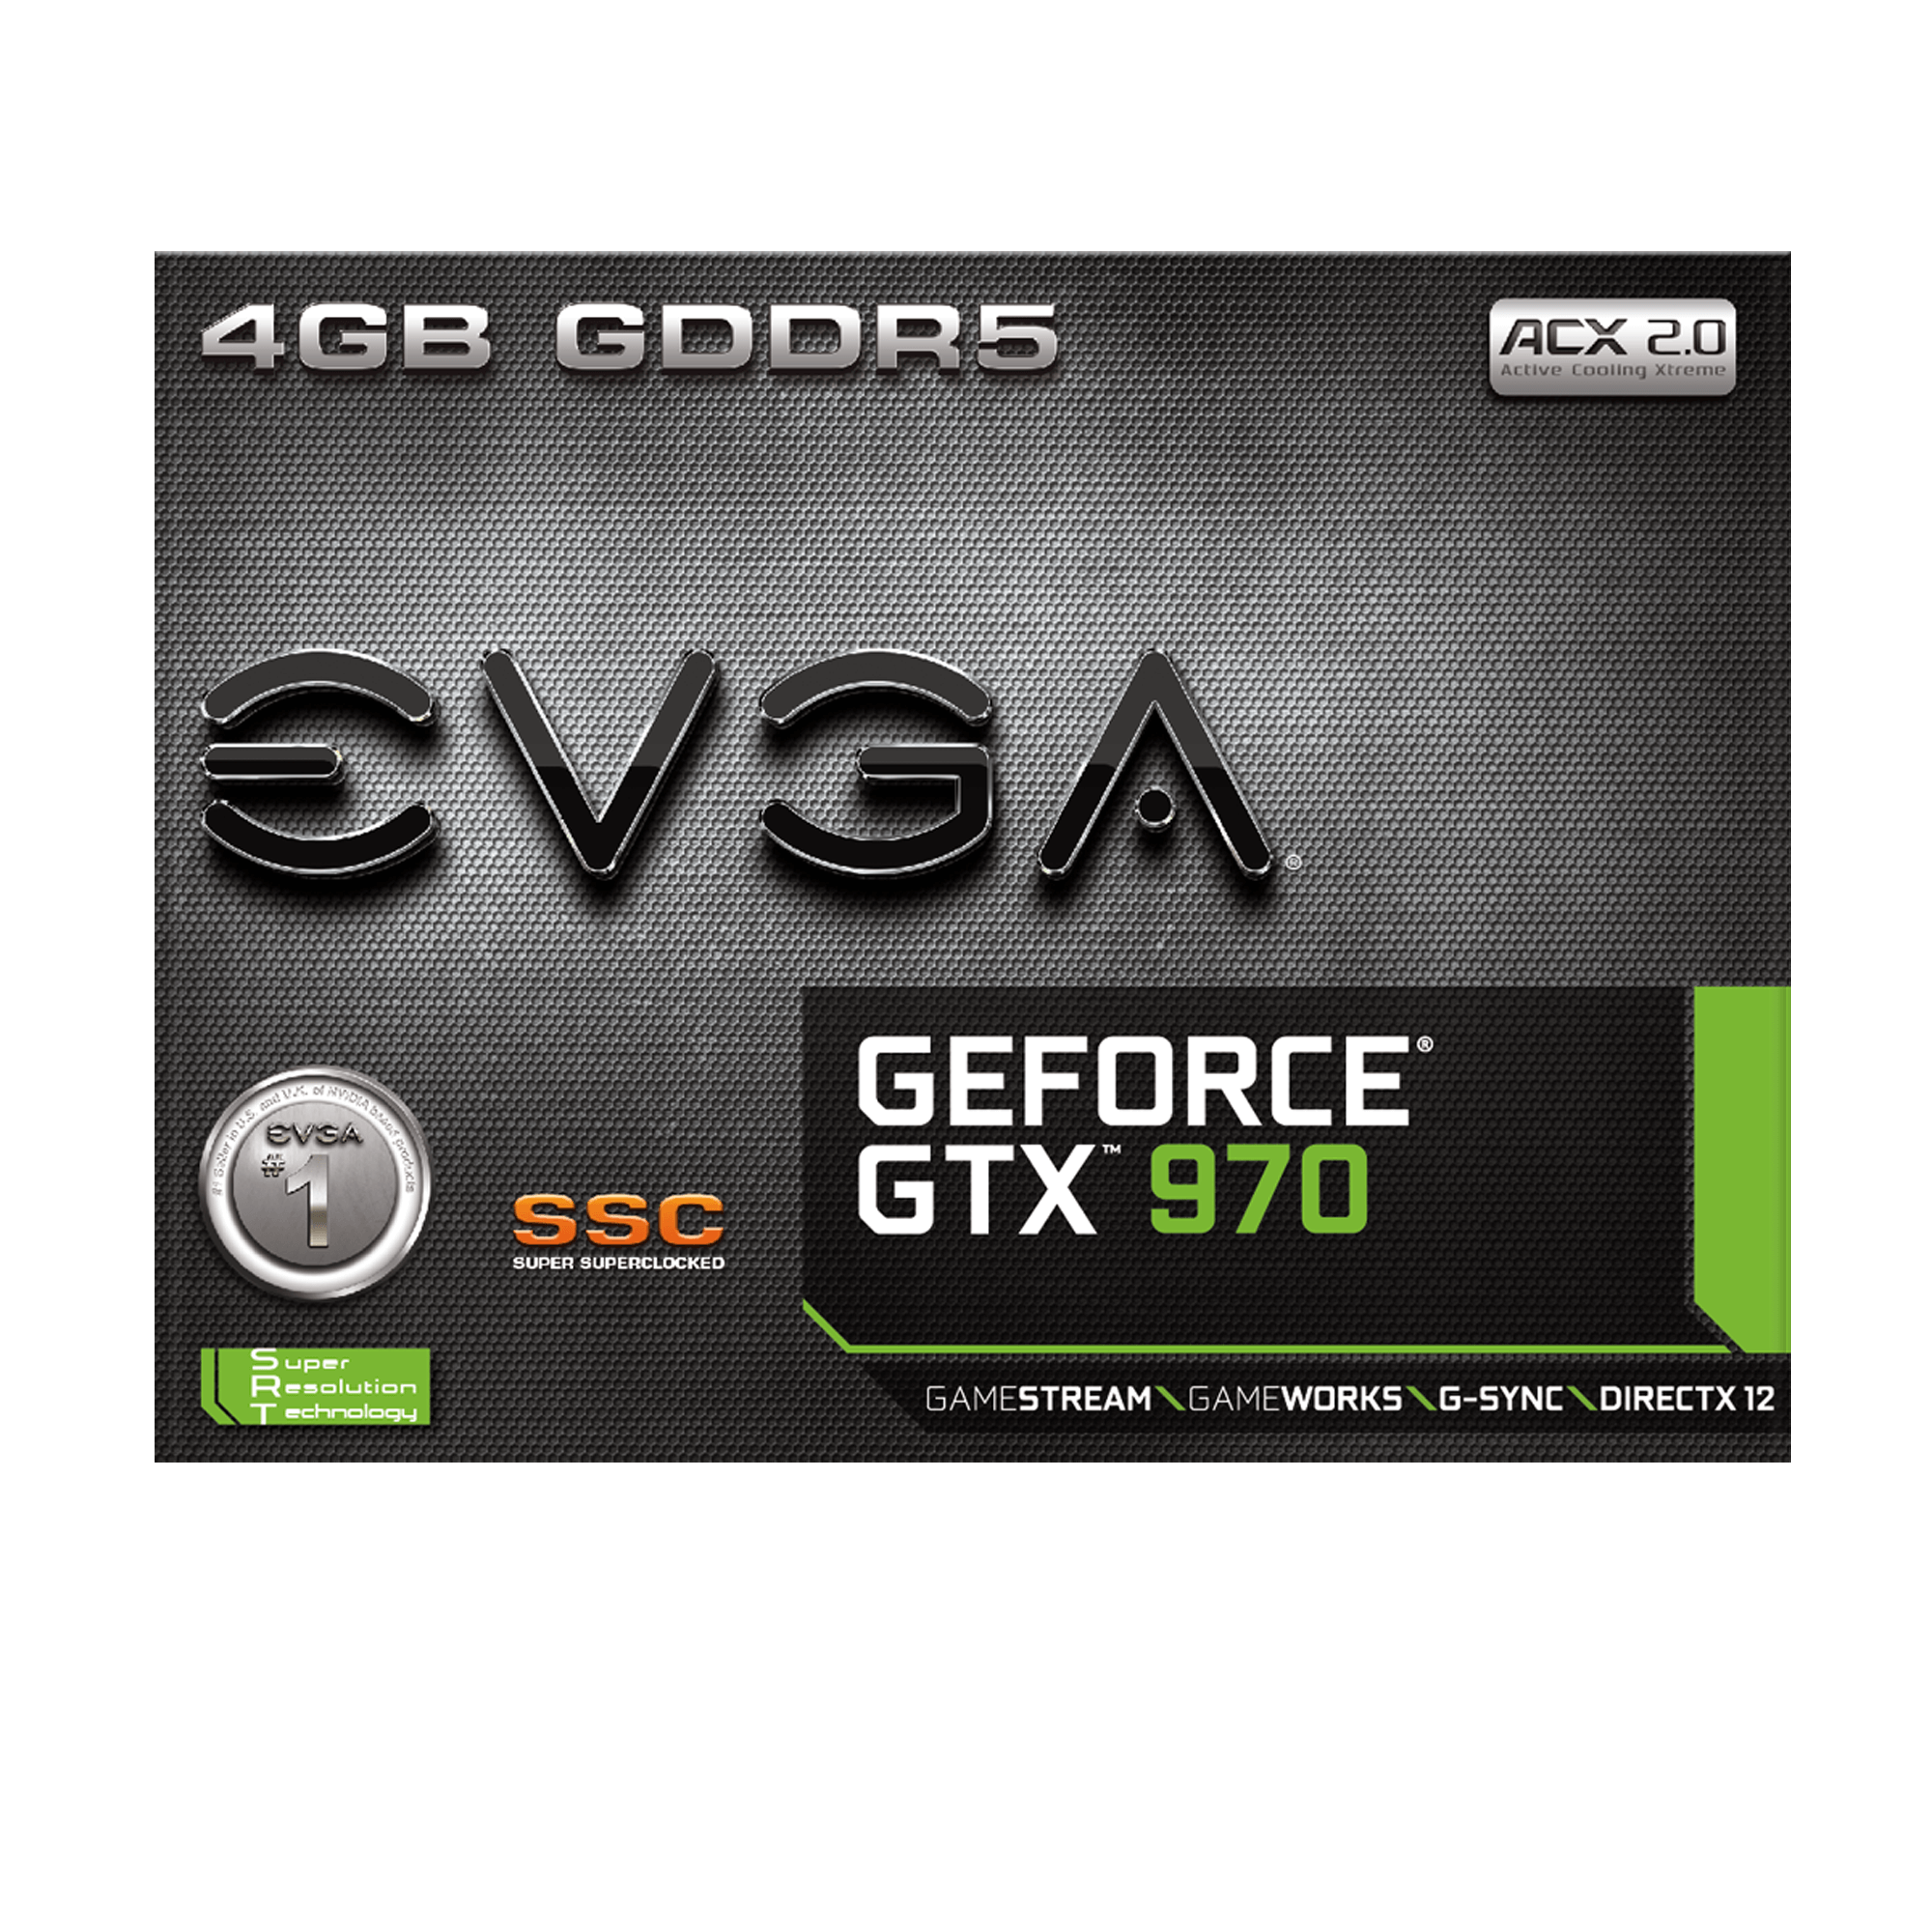 EVGA - Asia - Products - EVGA GeForce GTX 970 SSC GAMING 